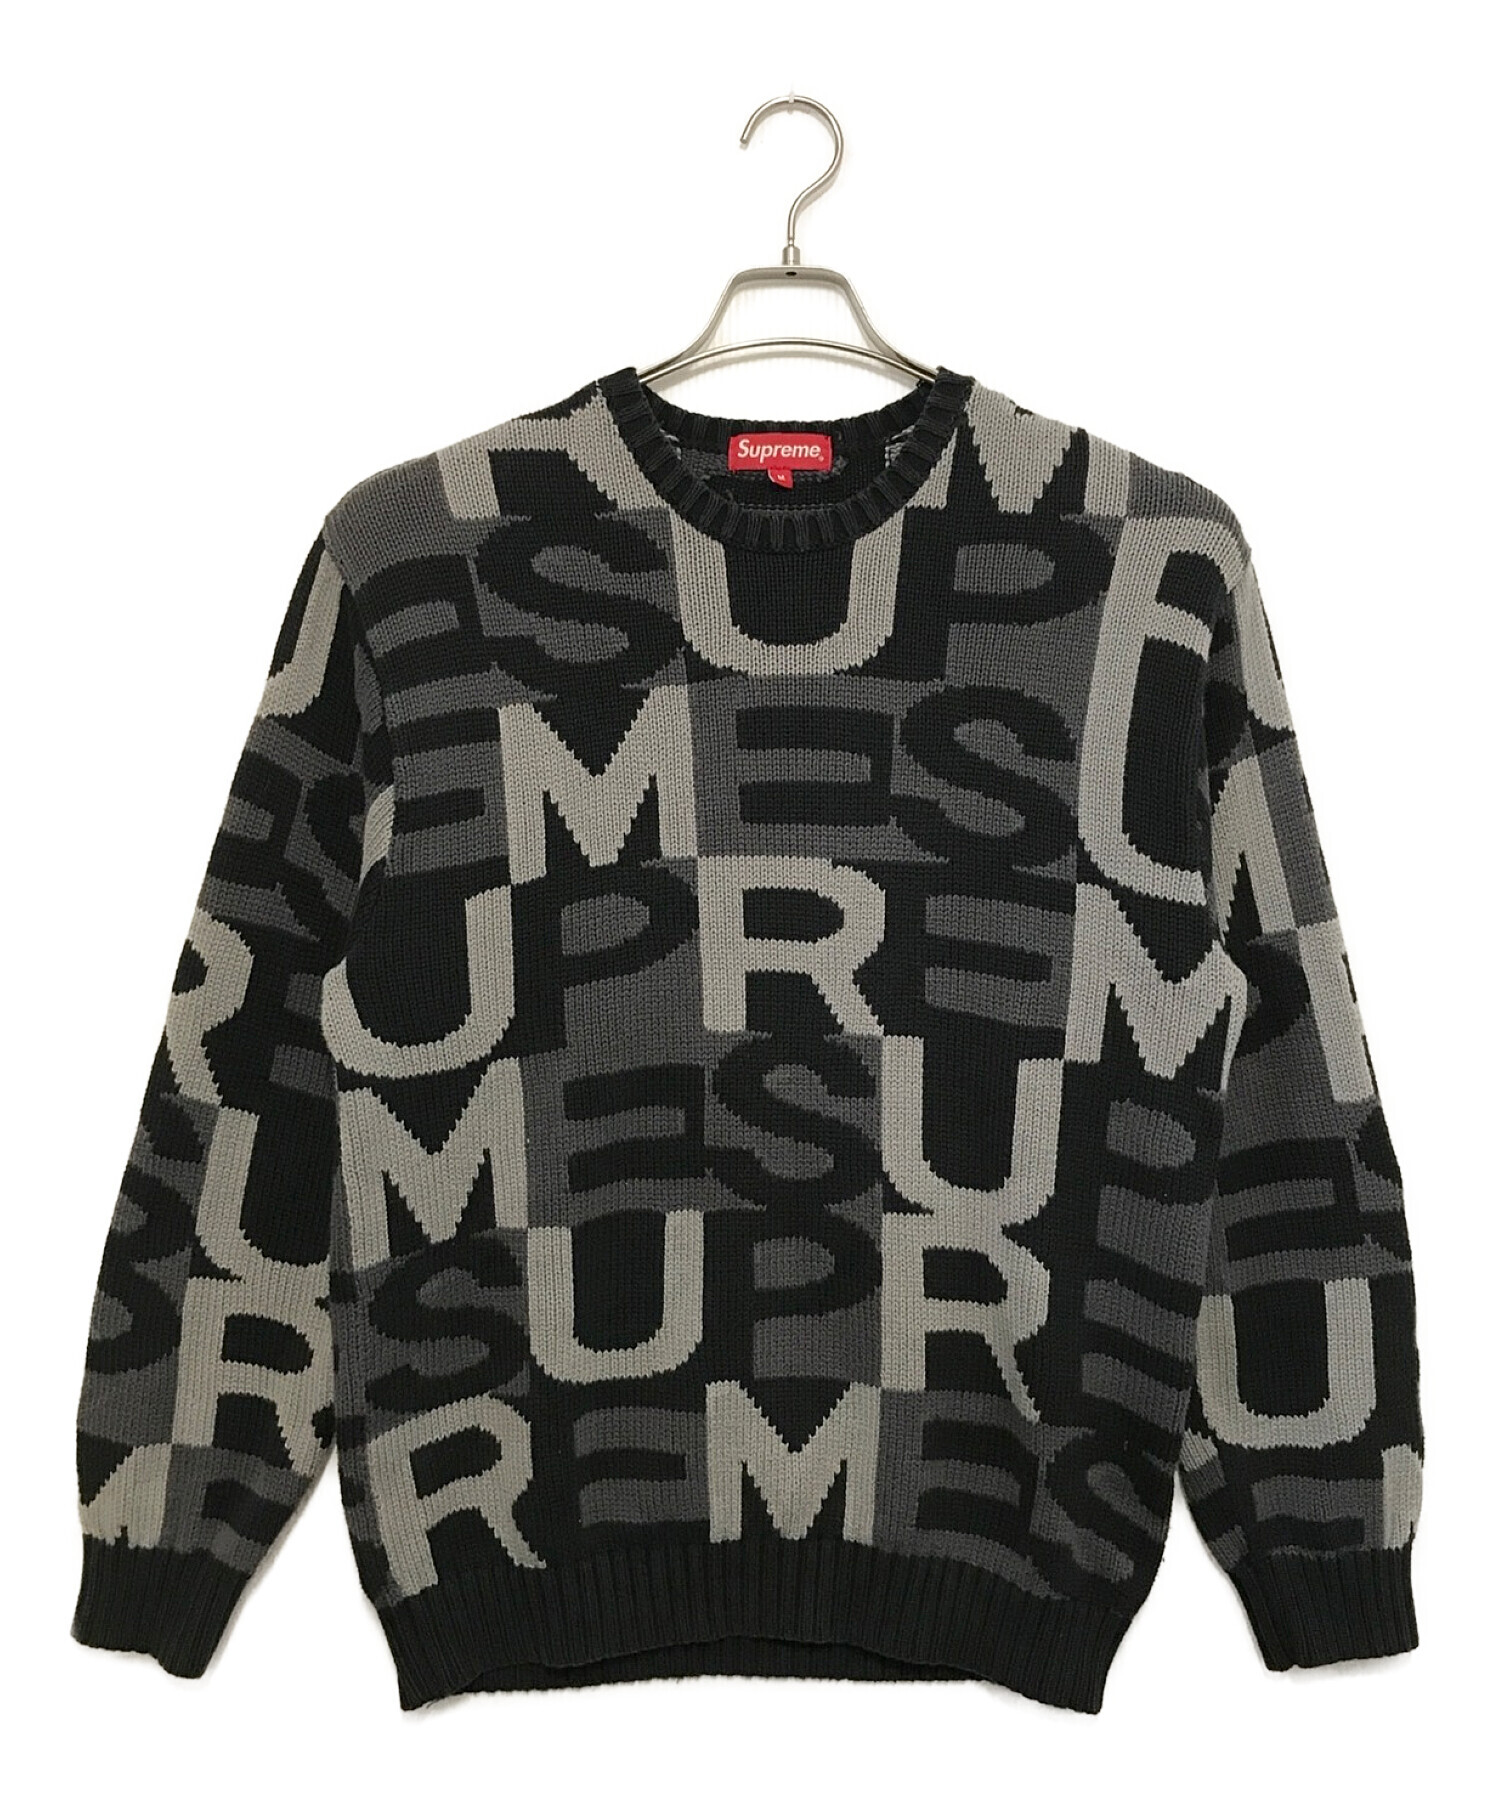 supreme big letters sweater  Ssize